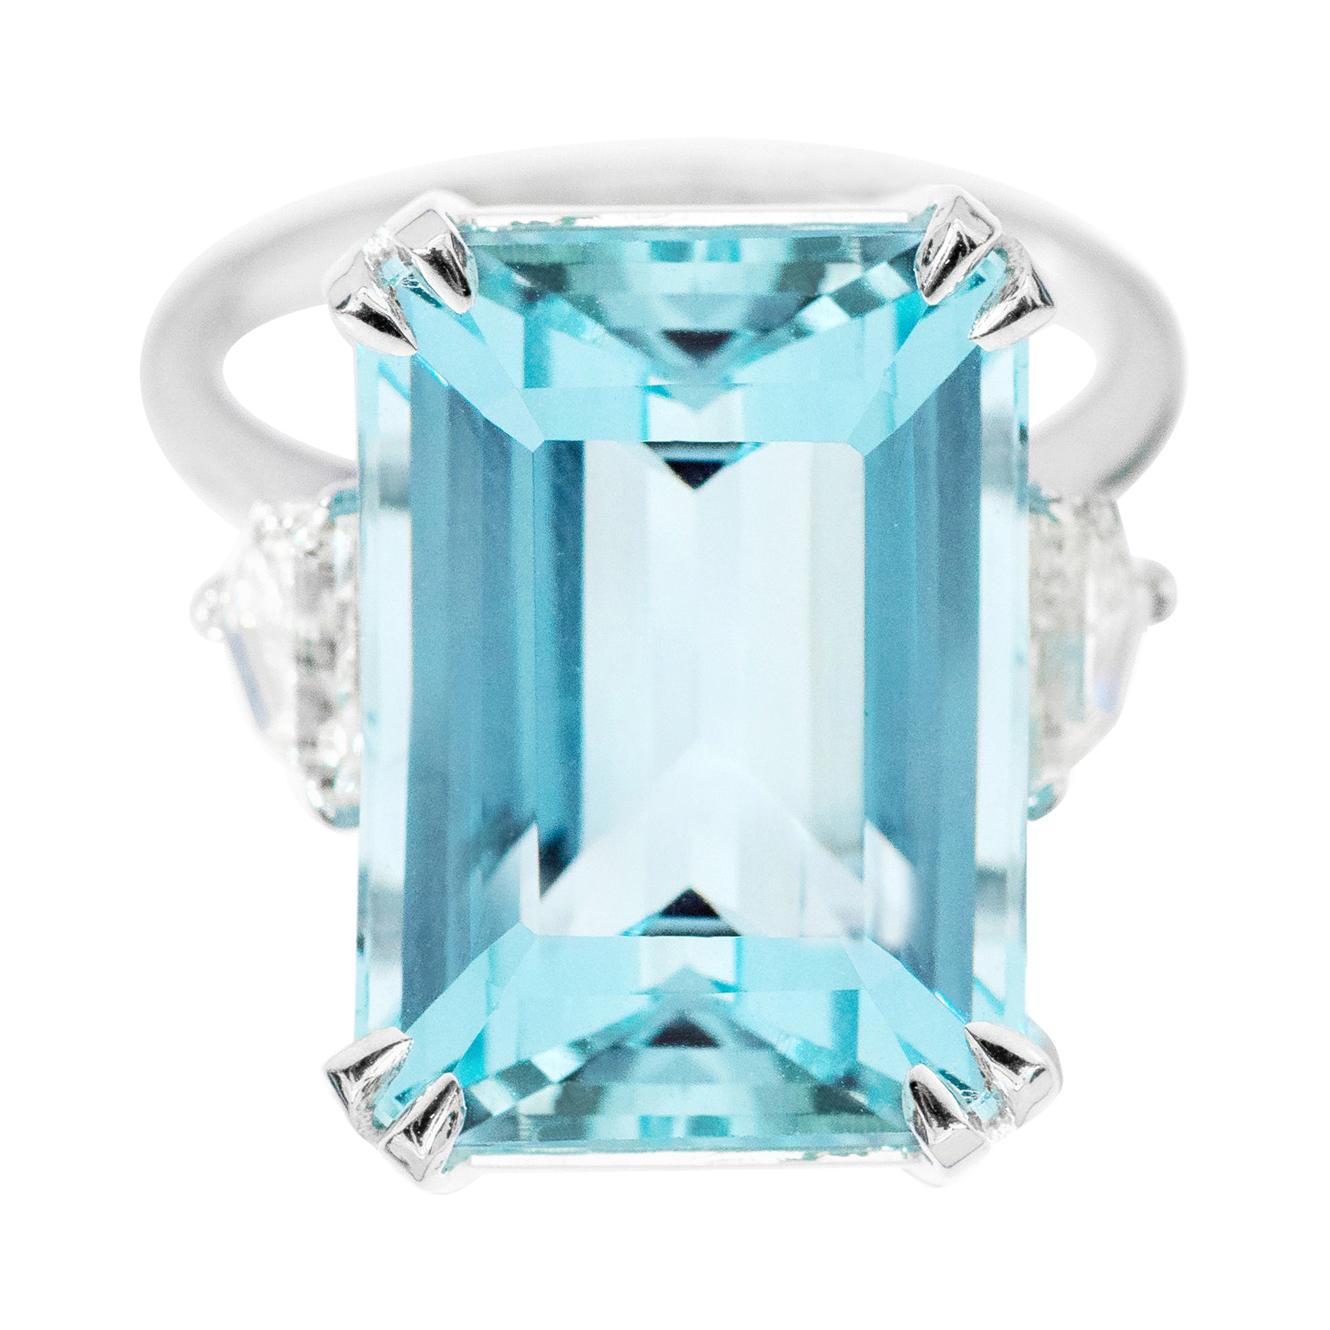 18 Karat White Gold 15.03 Carat Emerald-Cut Aquamarine and Diamond Cocktail Ring